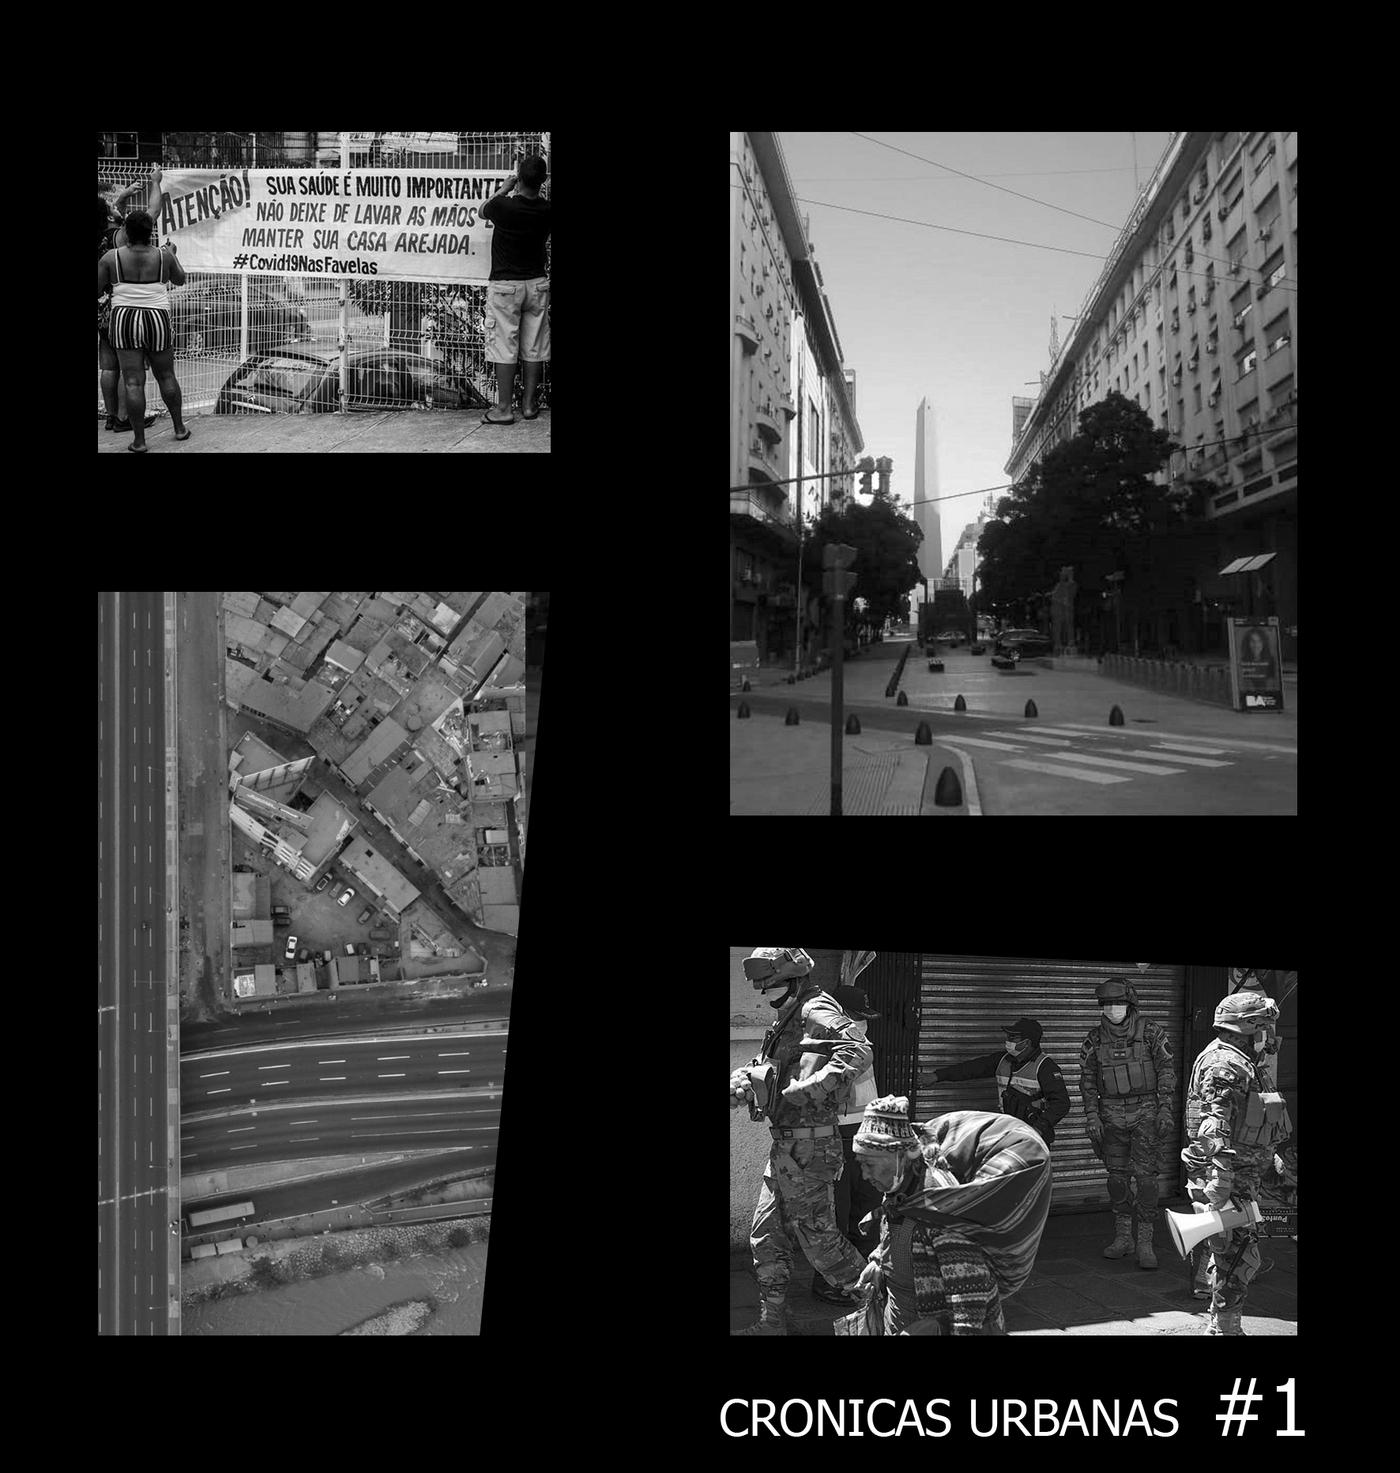 CRONICAS URBANAS #1